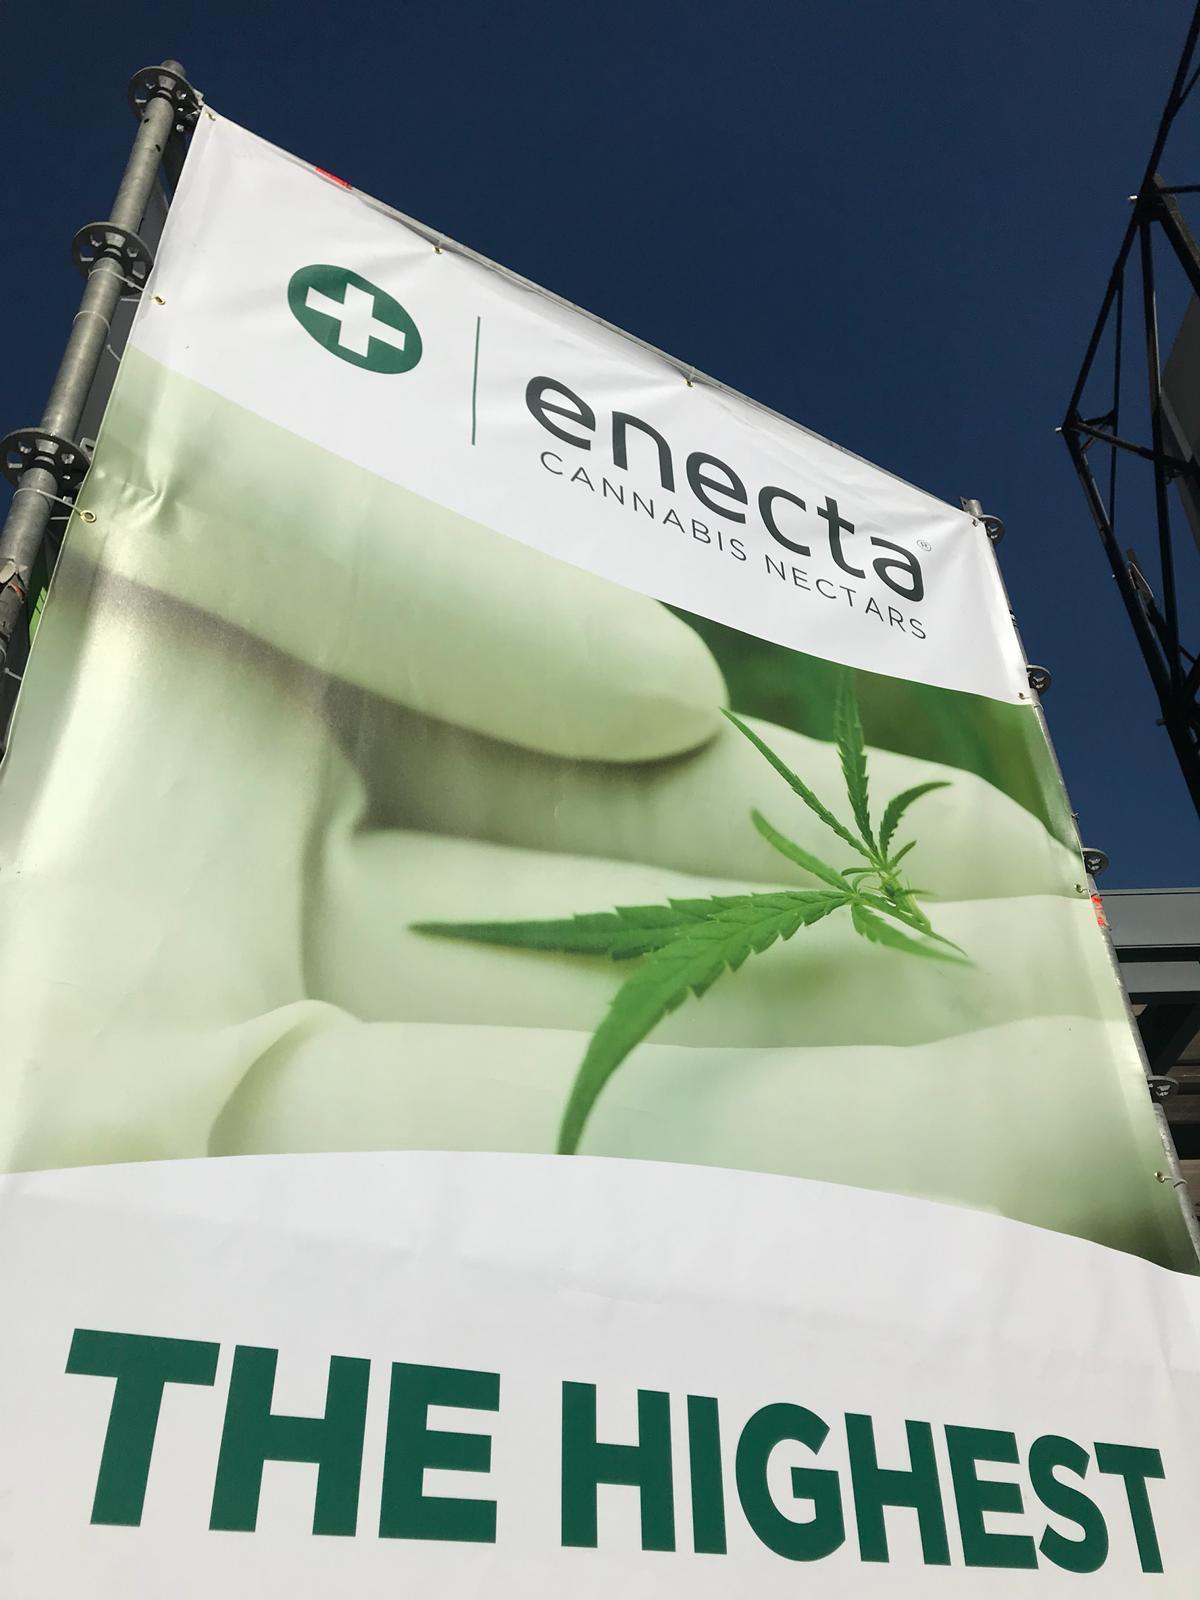 Balkannabis Expo in Greece promoted by enecta